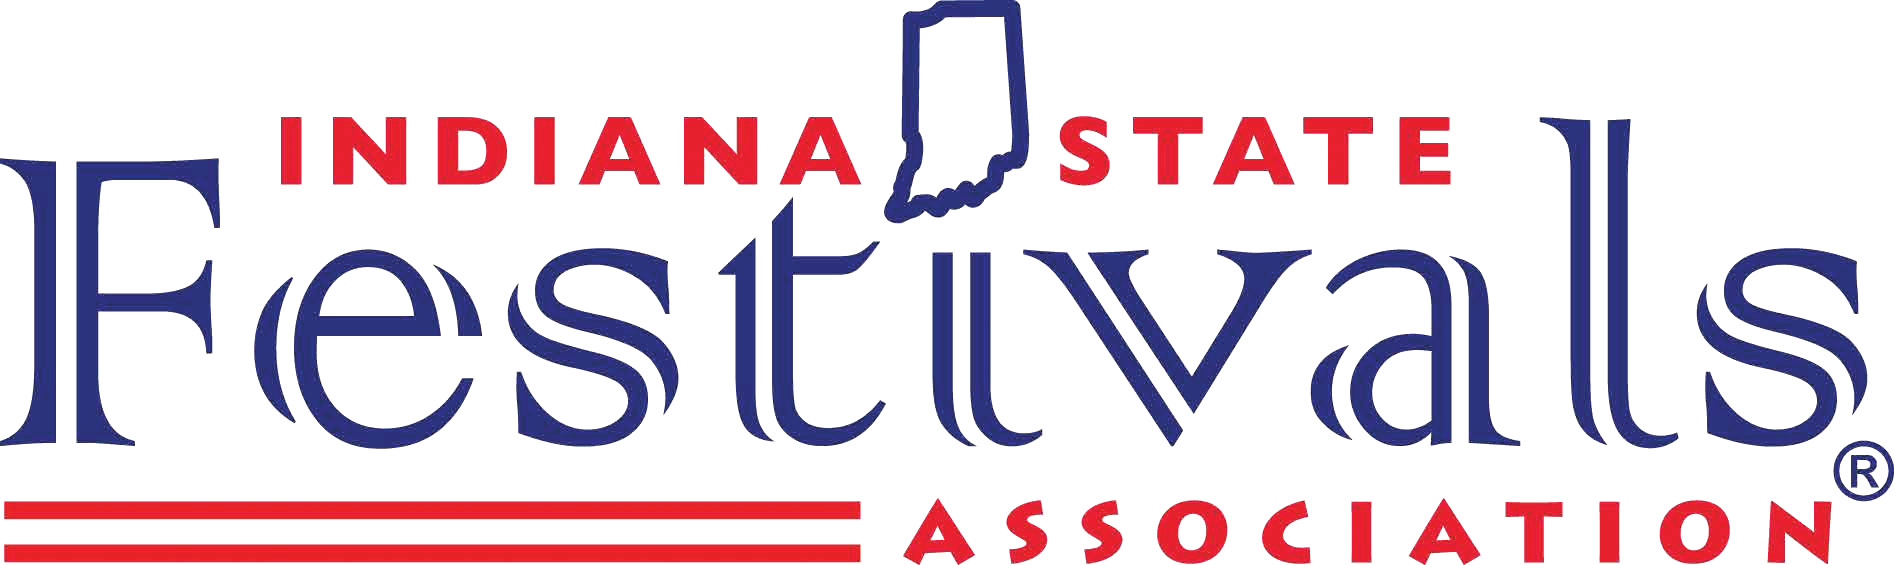 Indiana State Festivals Association - ISFA 1 promotional vehicle